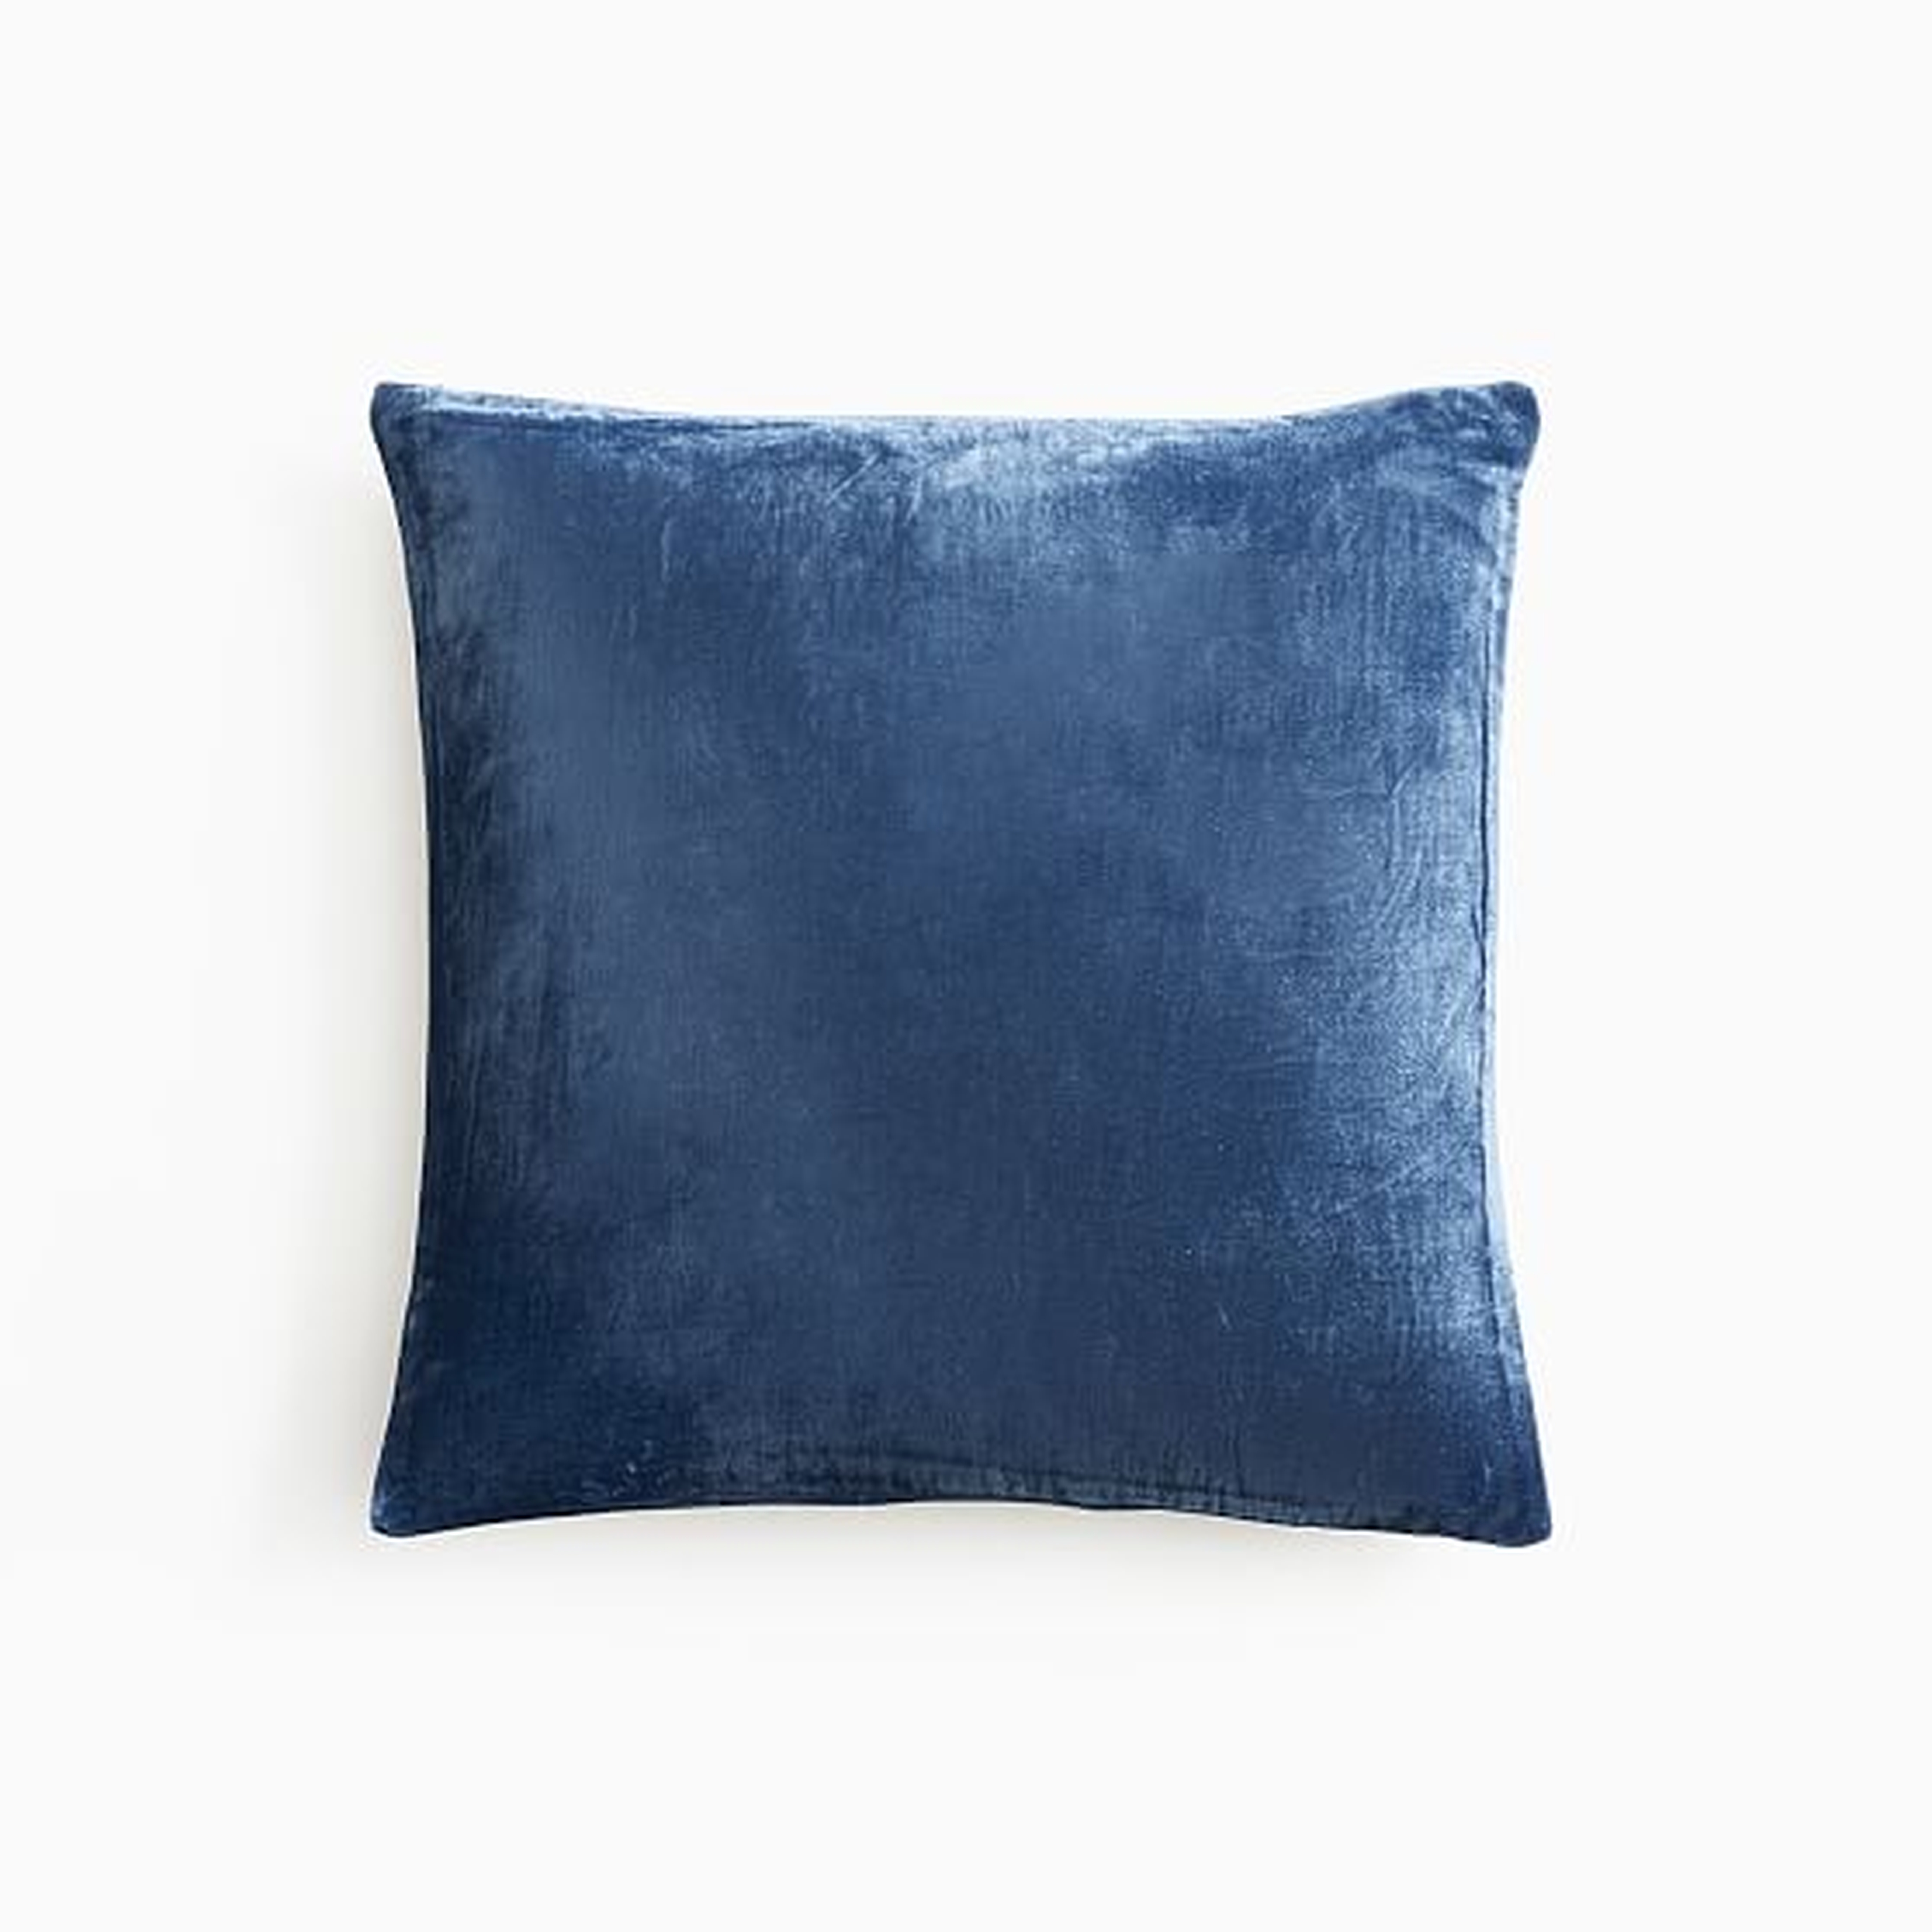 Lush Velvet Pillow Cover, 18" x 18", Regal Blue - West Elm